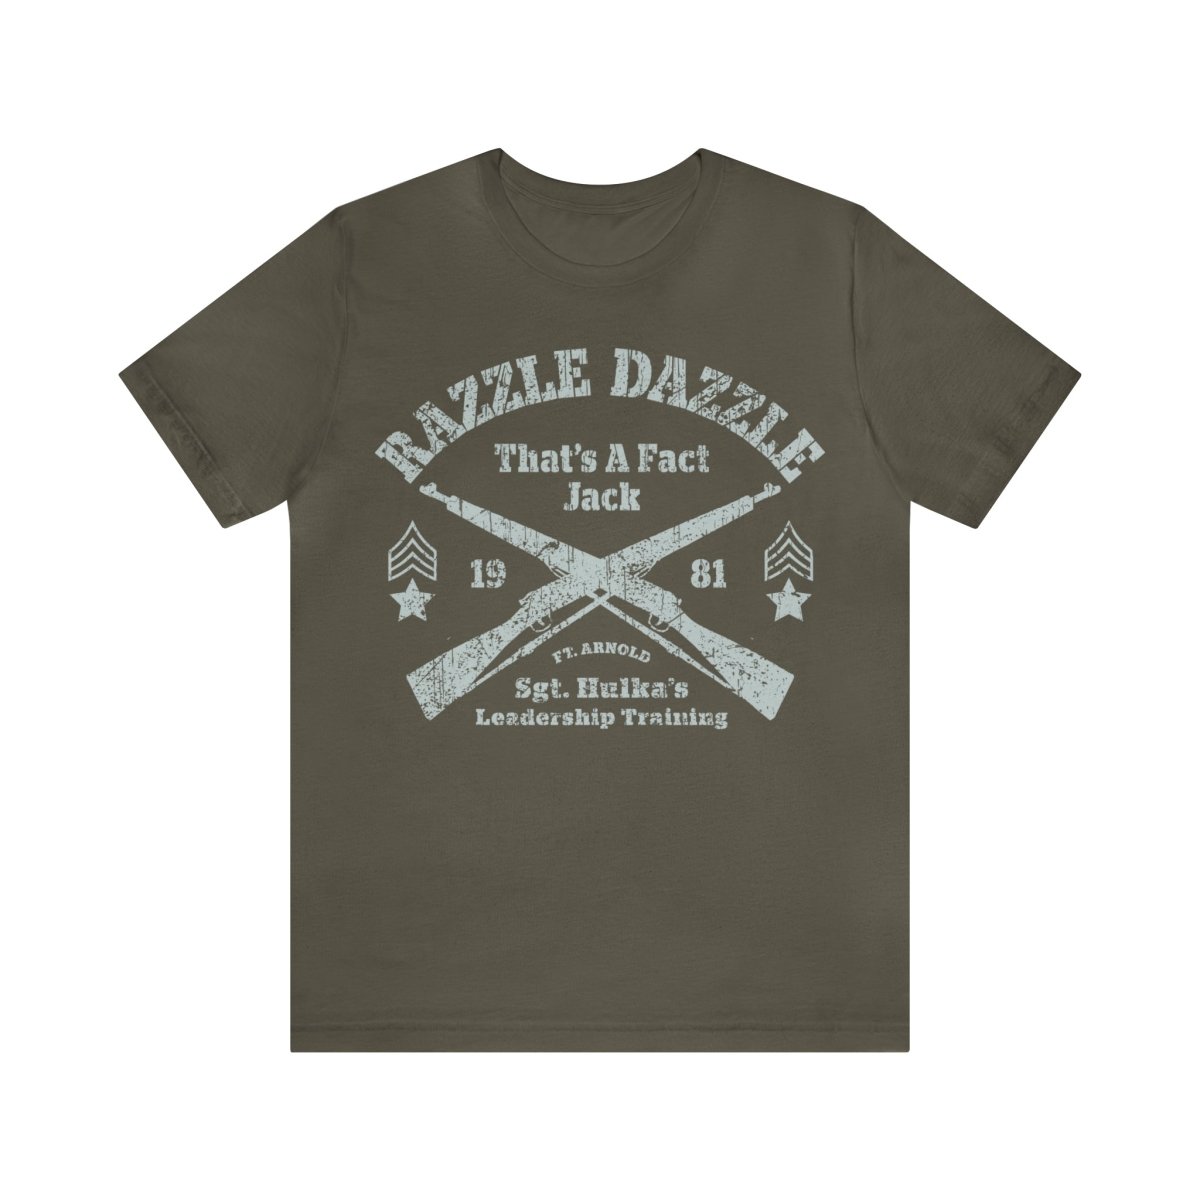 Earn Your Stripes Premium T-Shirt, Razzle Dazzle, Sgt Hulka's Leadership Army Training